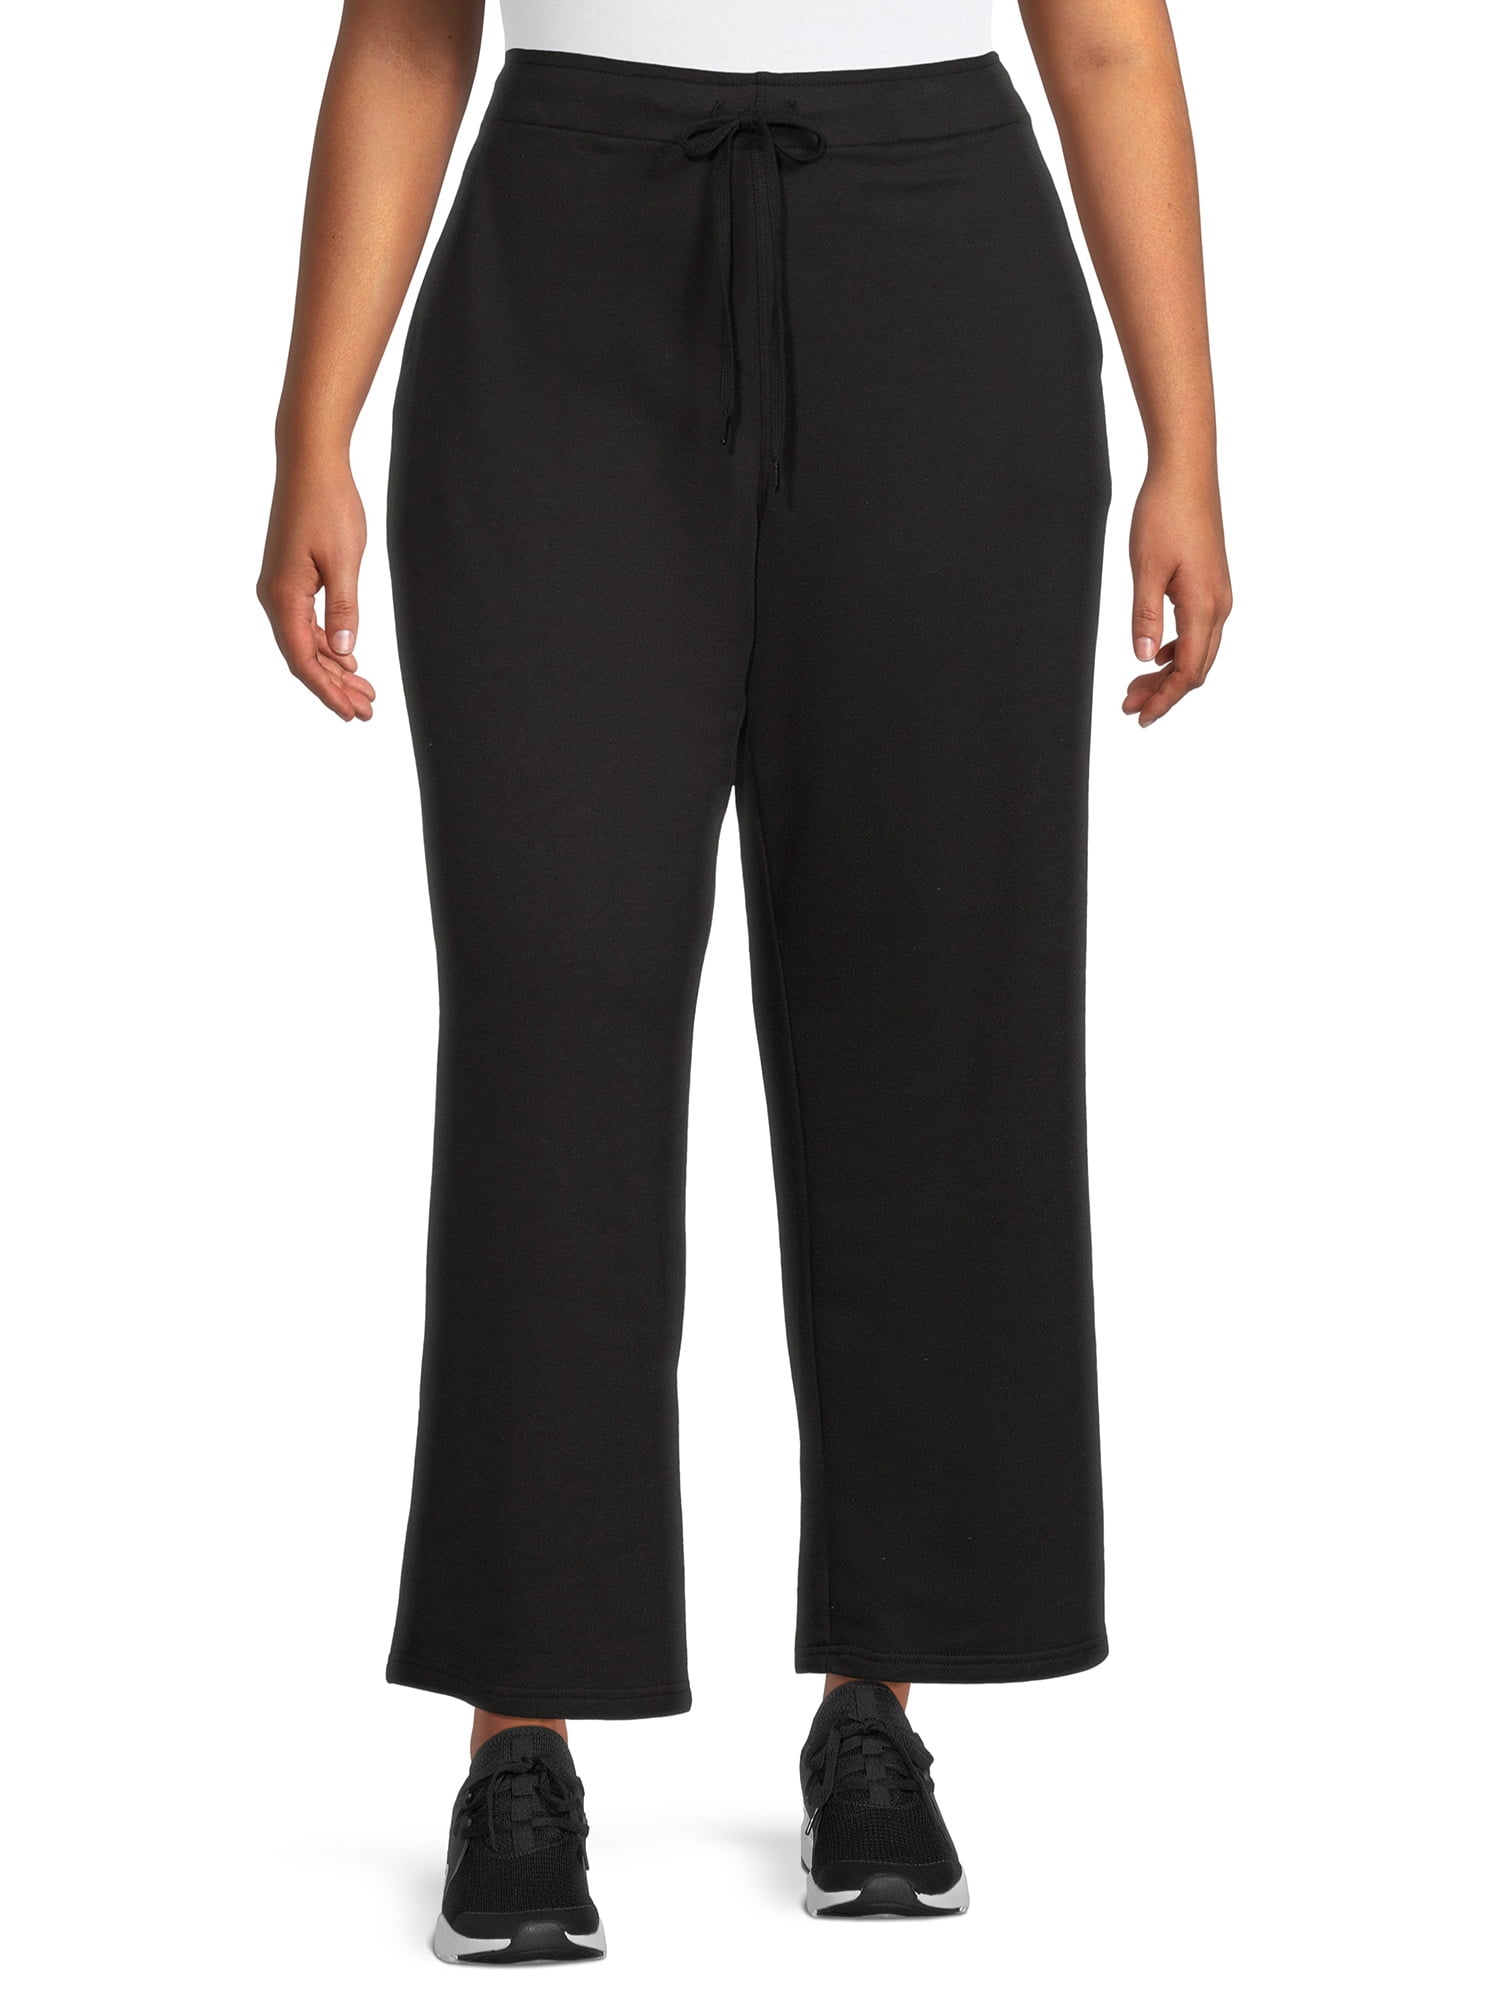 Avia Women's Plus Size Flare Sweatpants - Walmart.com